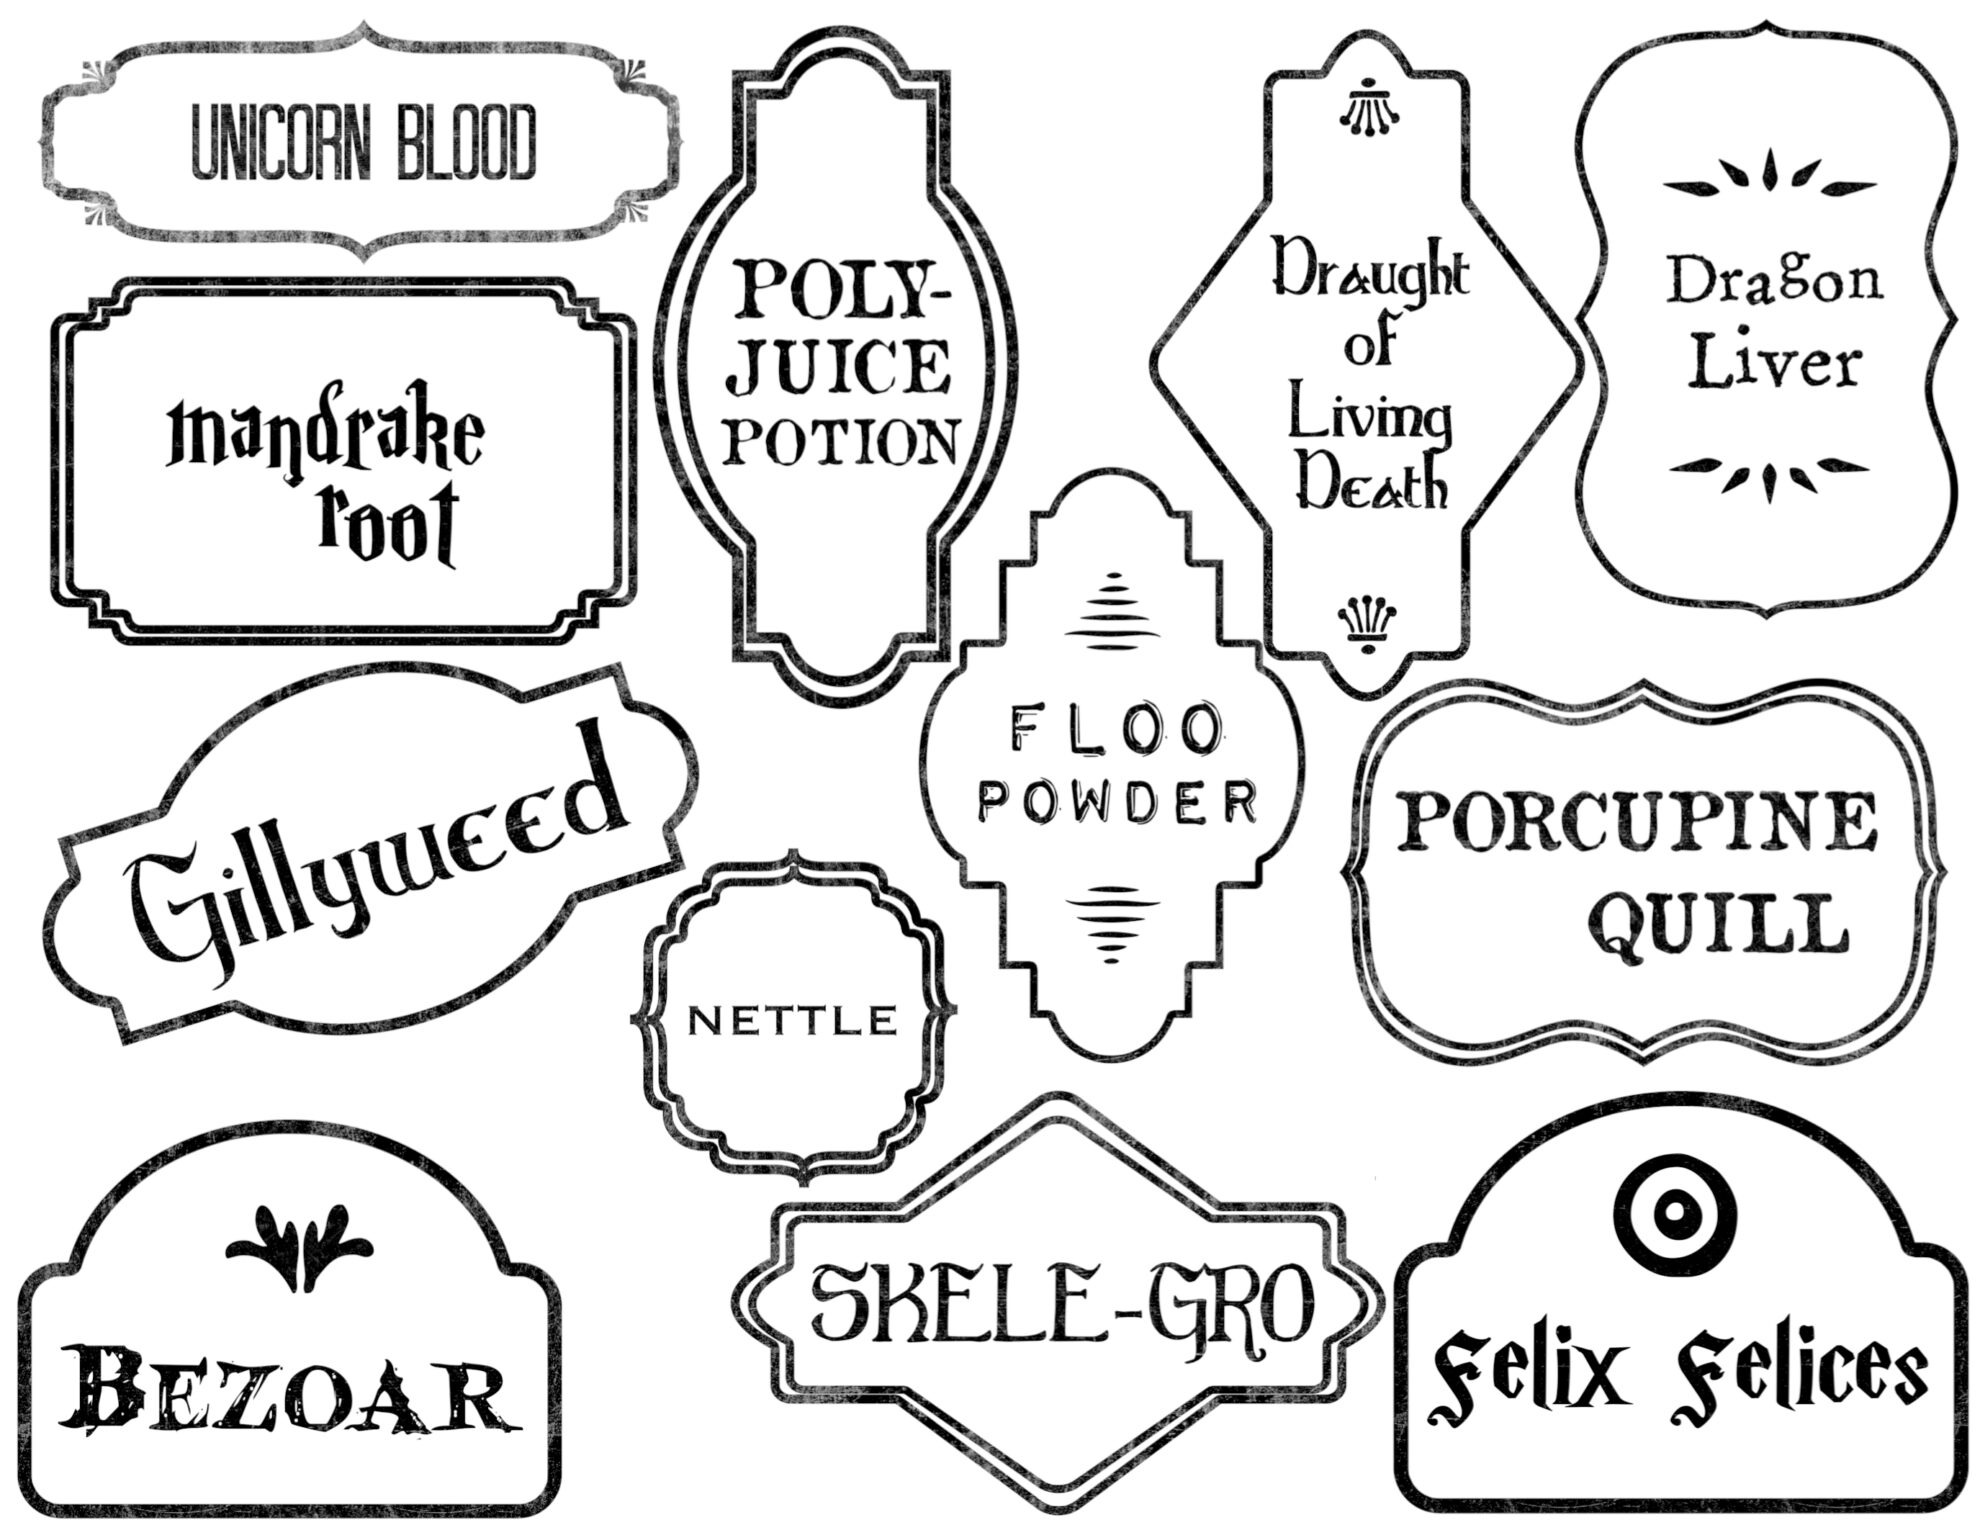 Harry Potter Potion Labels Printable Paper Trail Design